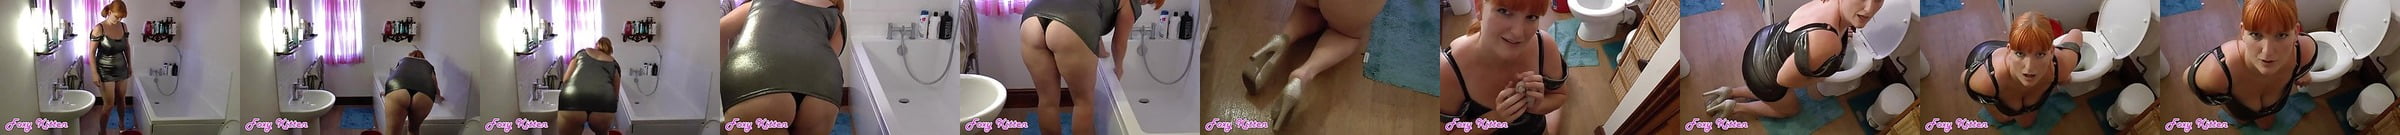 British Milf Diamond Works Her Nyloned Fanny On Toilet